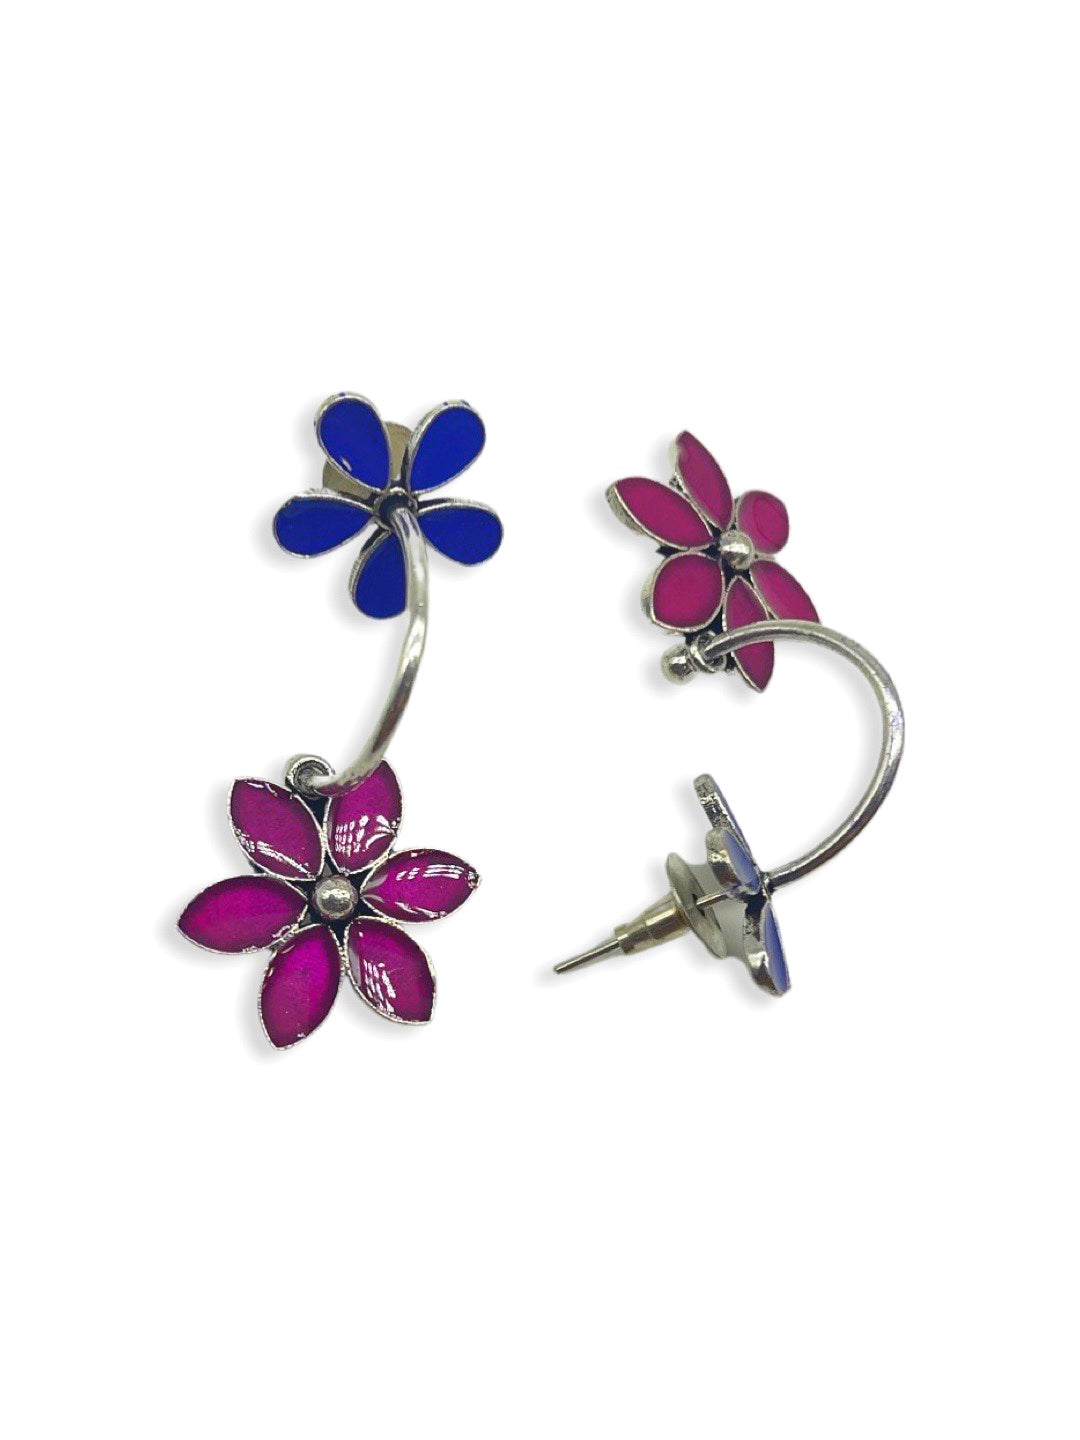 Handmade Purple Big Jhumkas Silver Replica Earrings / Indian Festive  Jewellery / Ambi Design / Statement / Antique Jewelry/ Diwali Outfit - Etsy  | Earrings collection, Jhumka earrings, Etsy